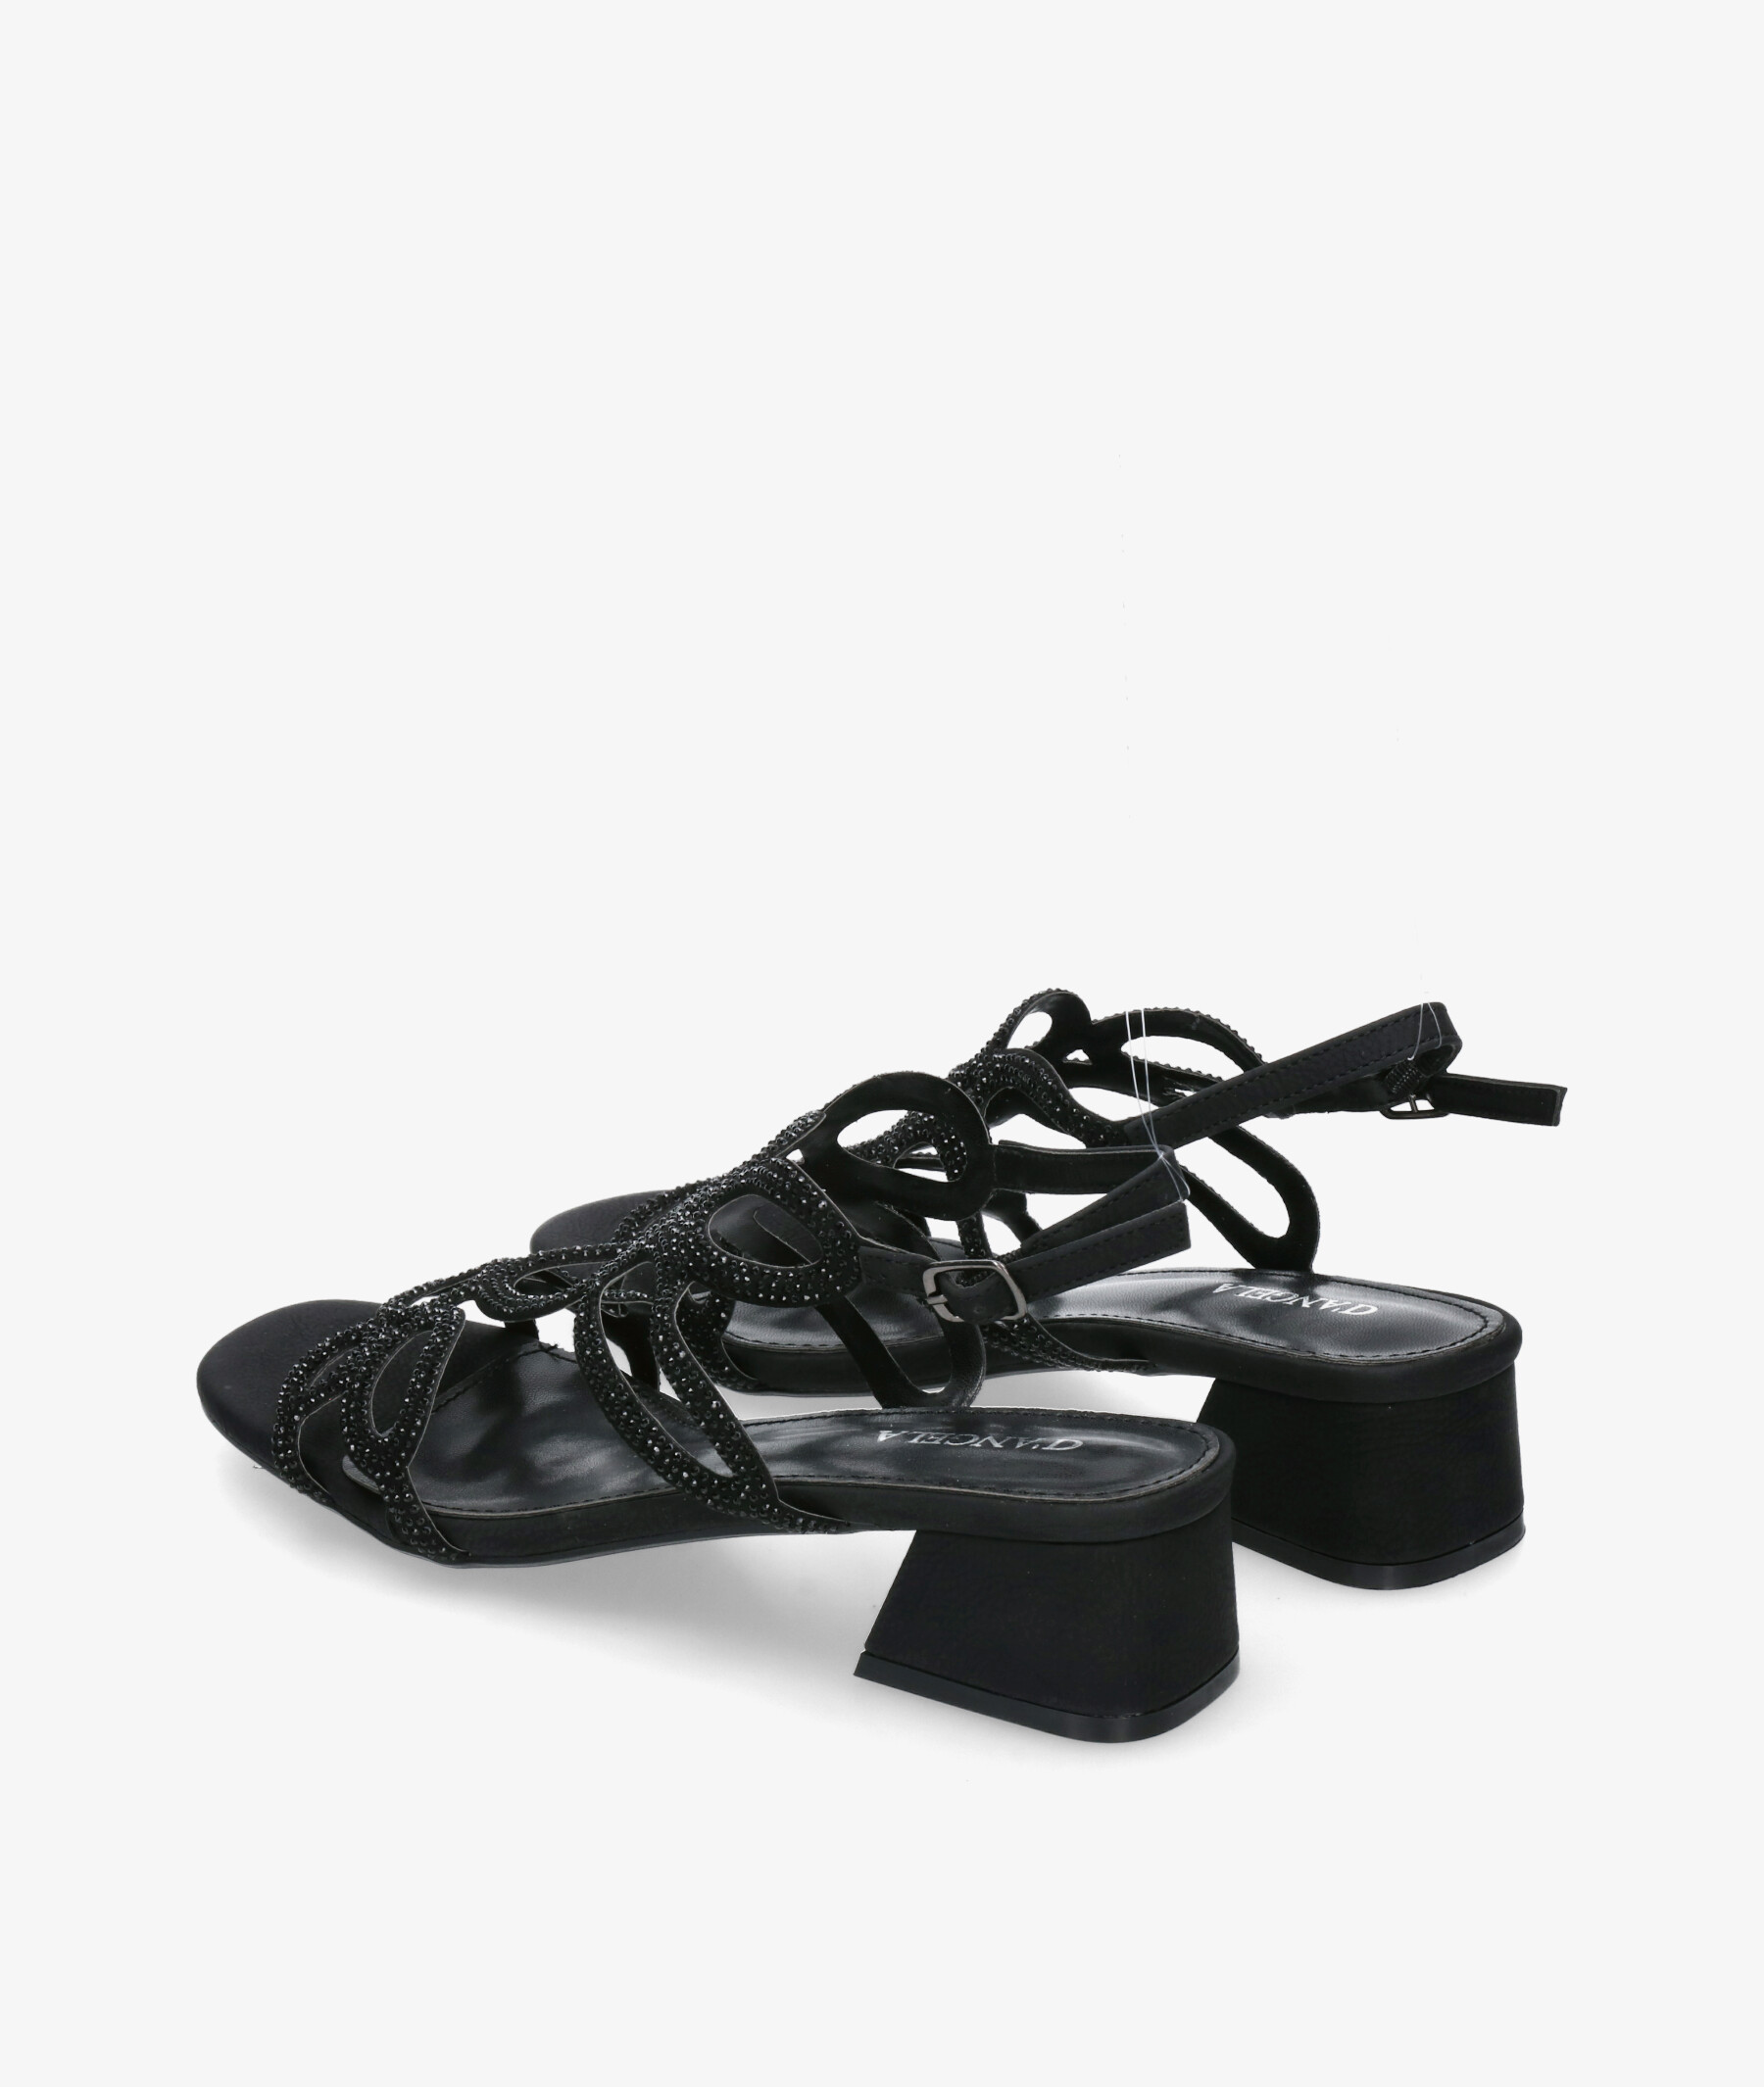 Porronet comfort sandals - 6500 | pabloochoa.shoes